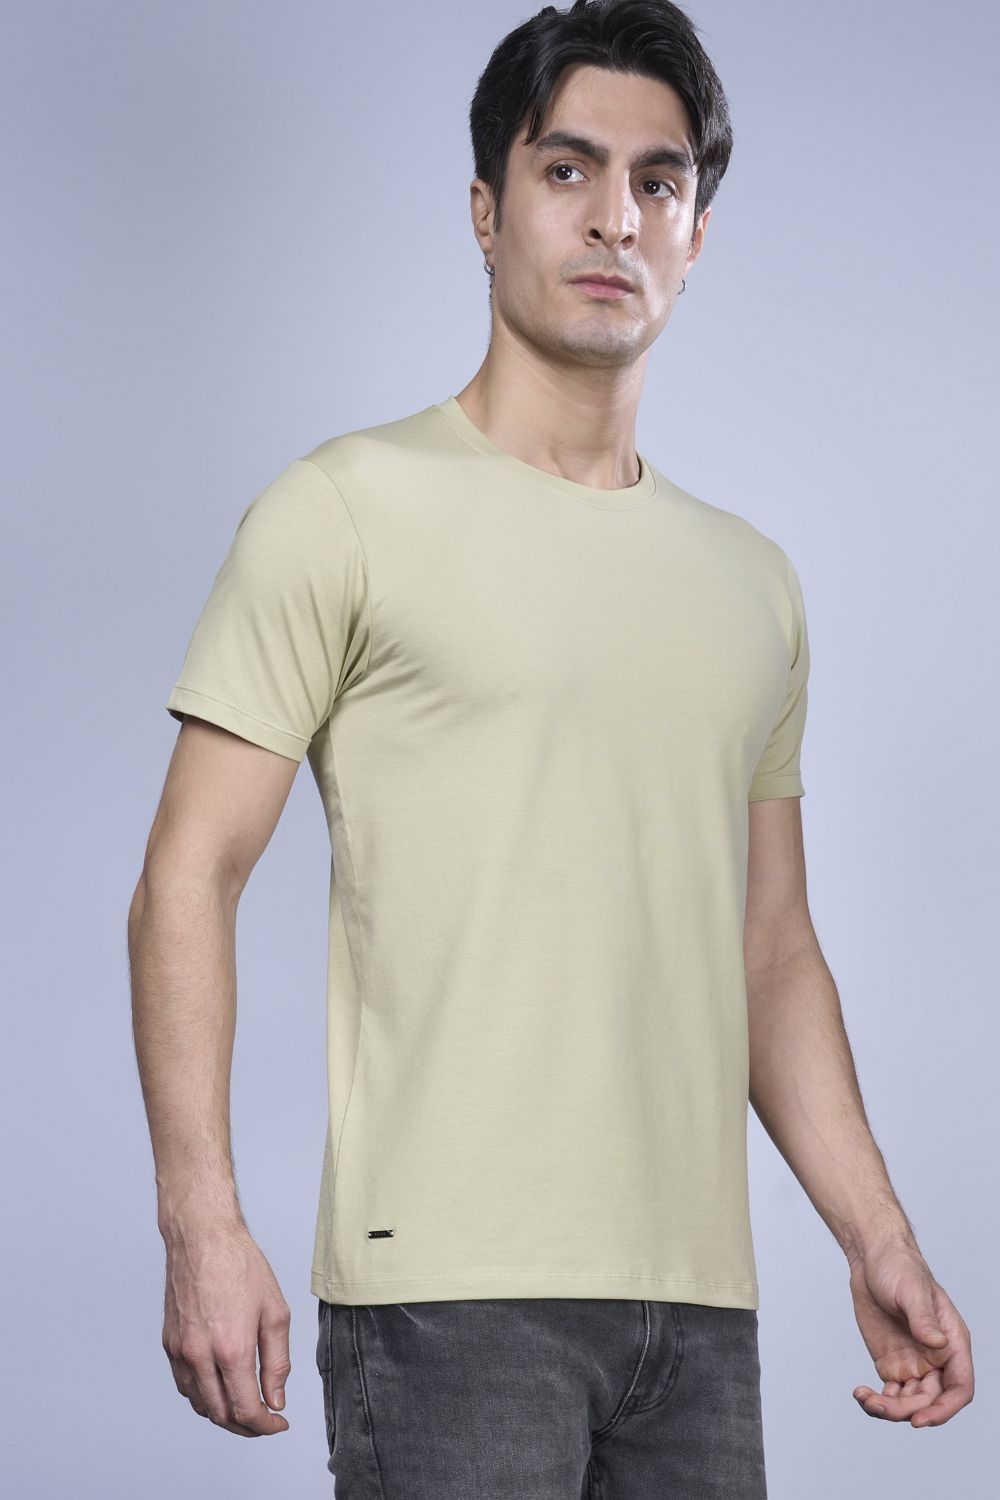 Dolphin gray half sleeves - Oversized Shirt